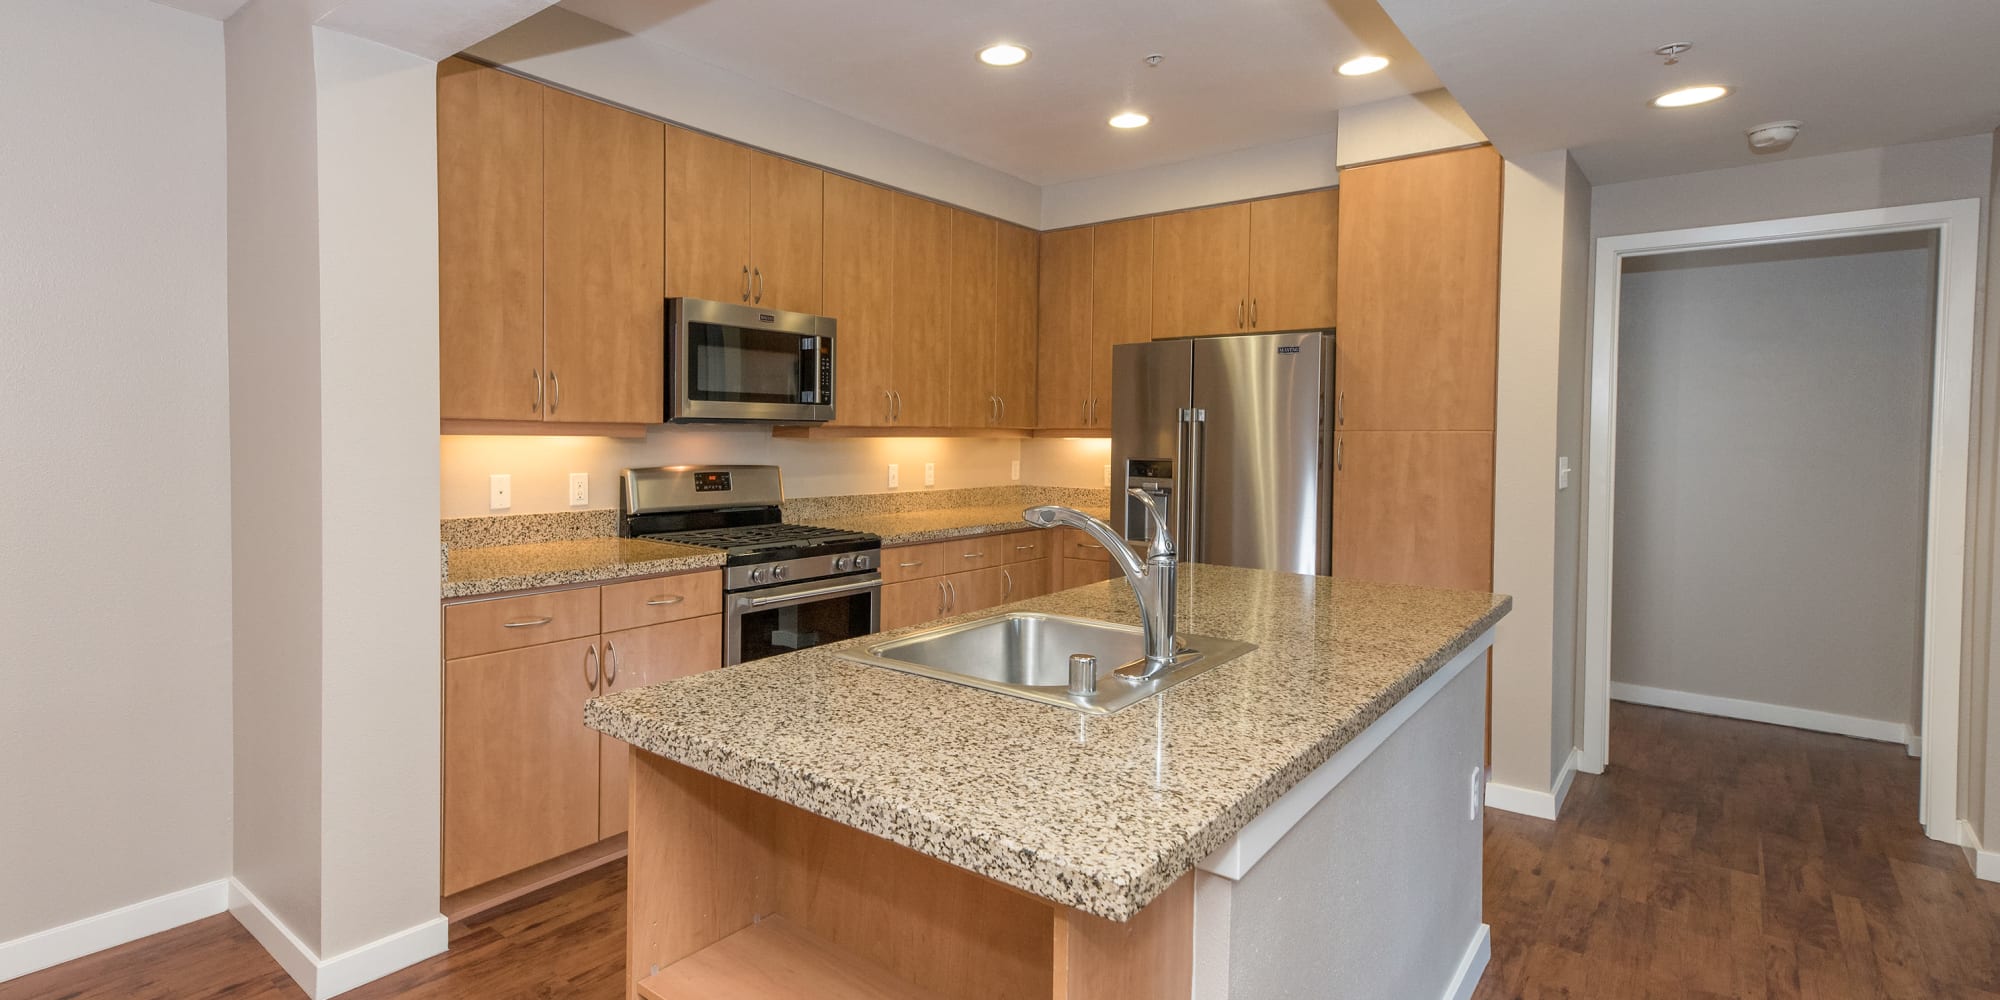 Kitchen at Azure Apartment Homes in Petaluma, California